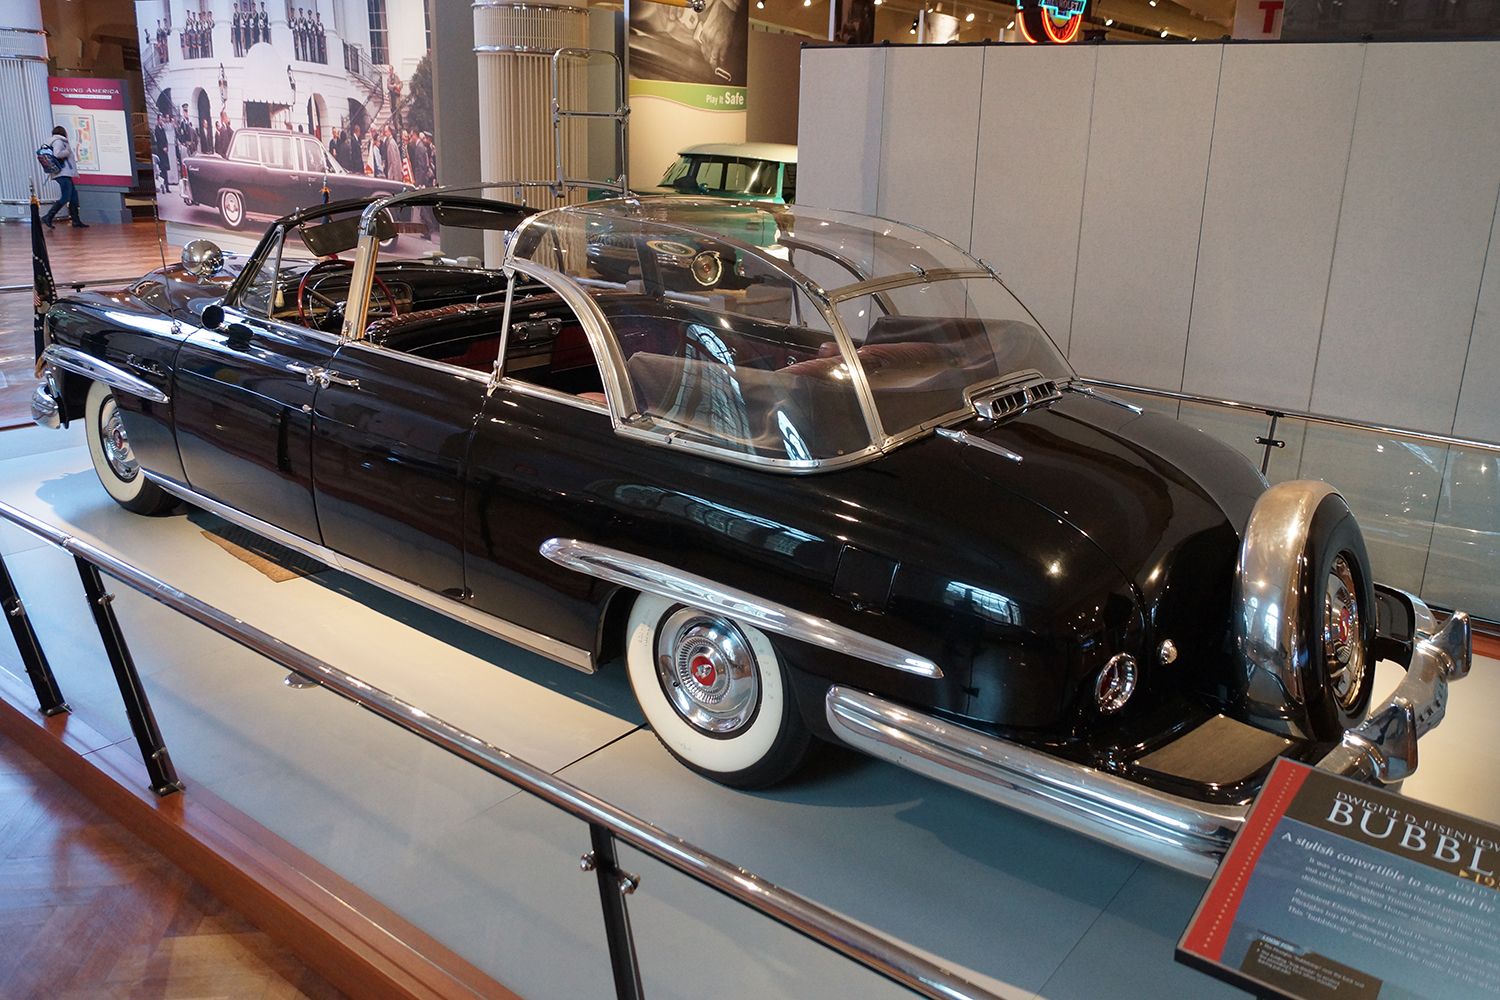 President Dwight Eisenhower 1950 Lincoln Bubbletop Car 2